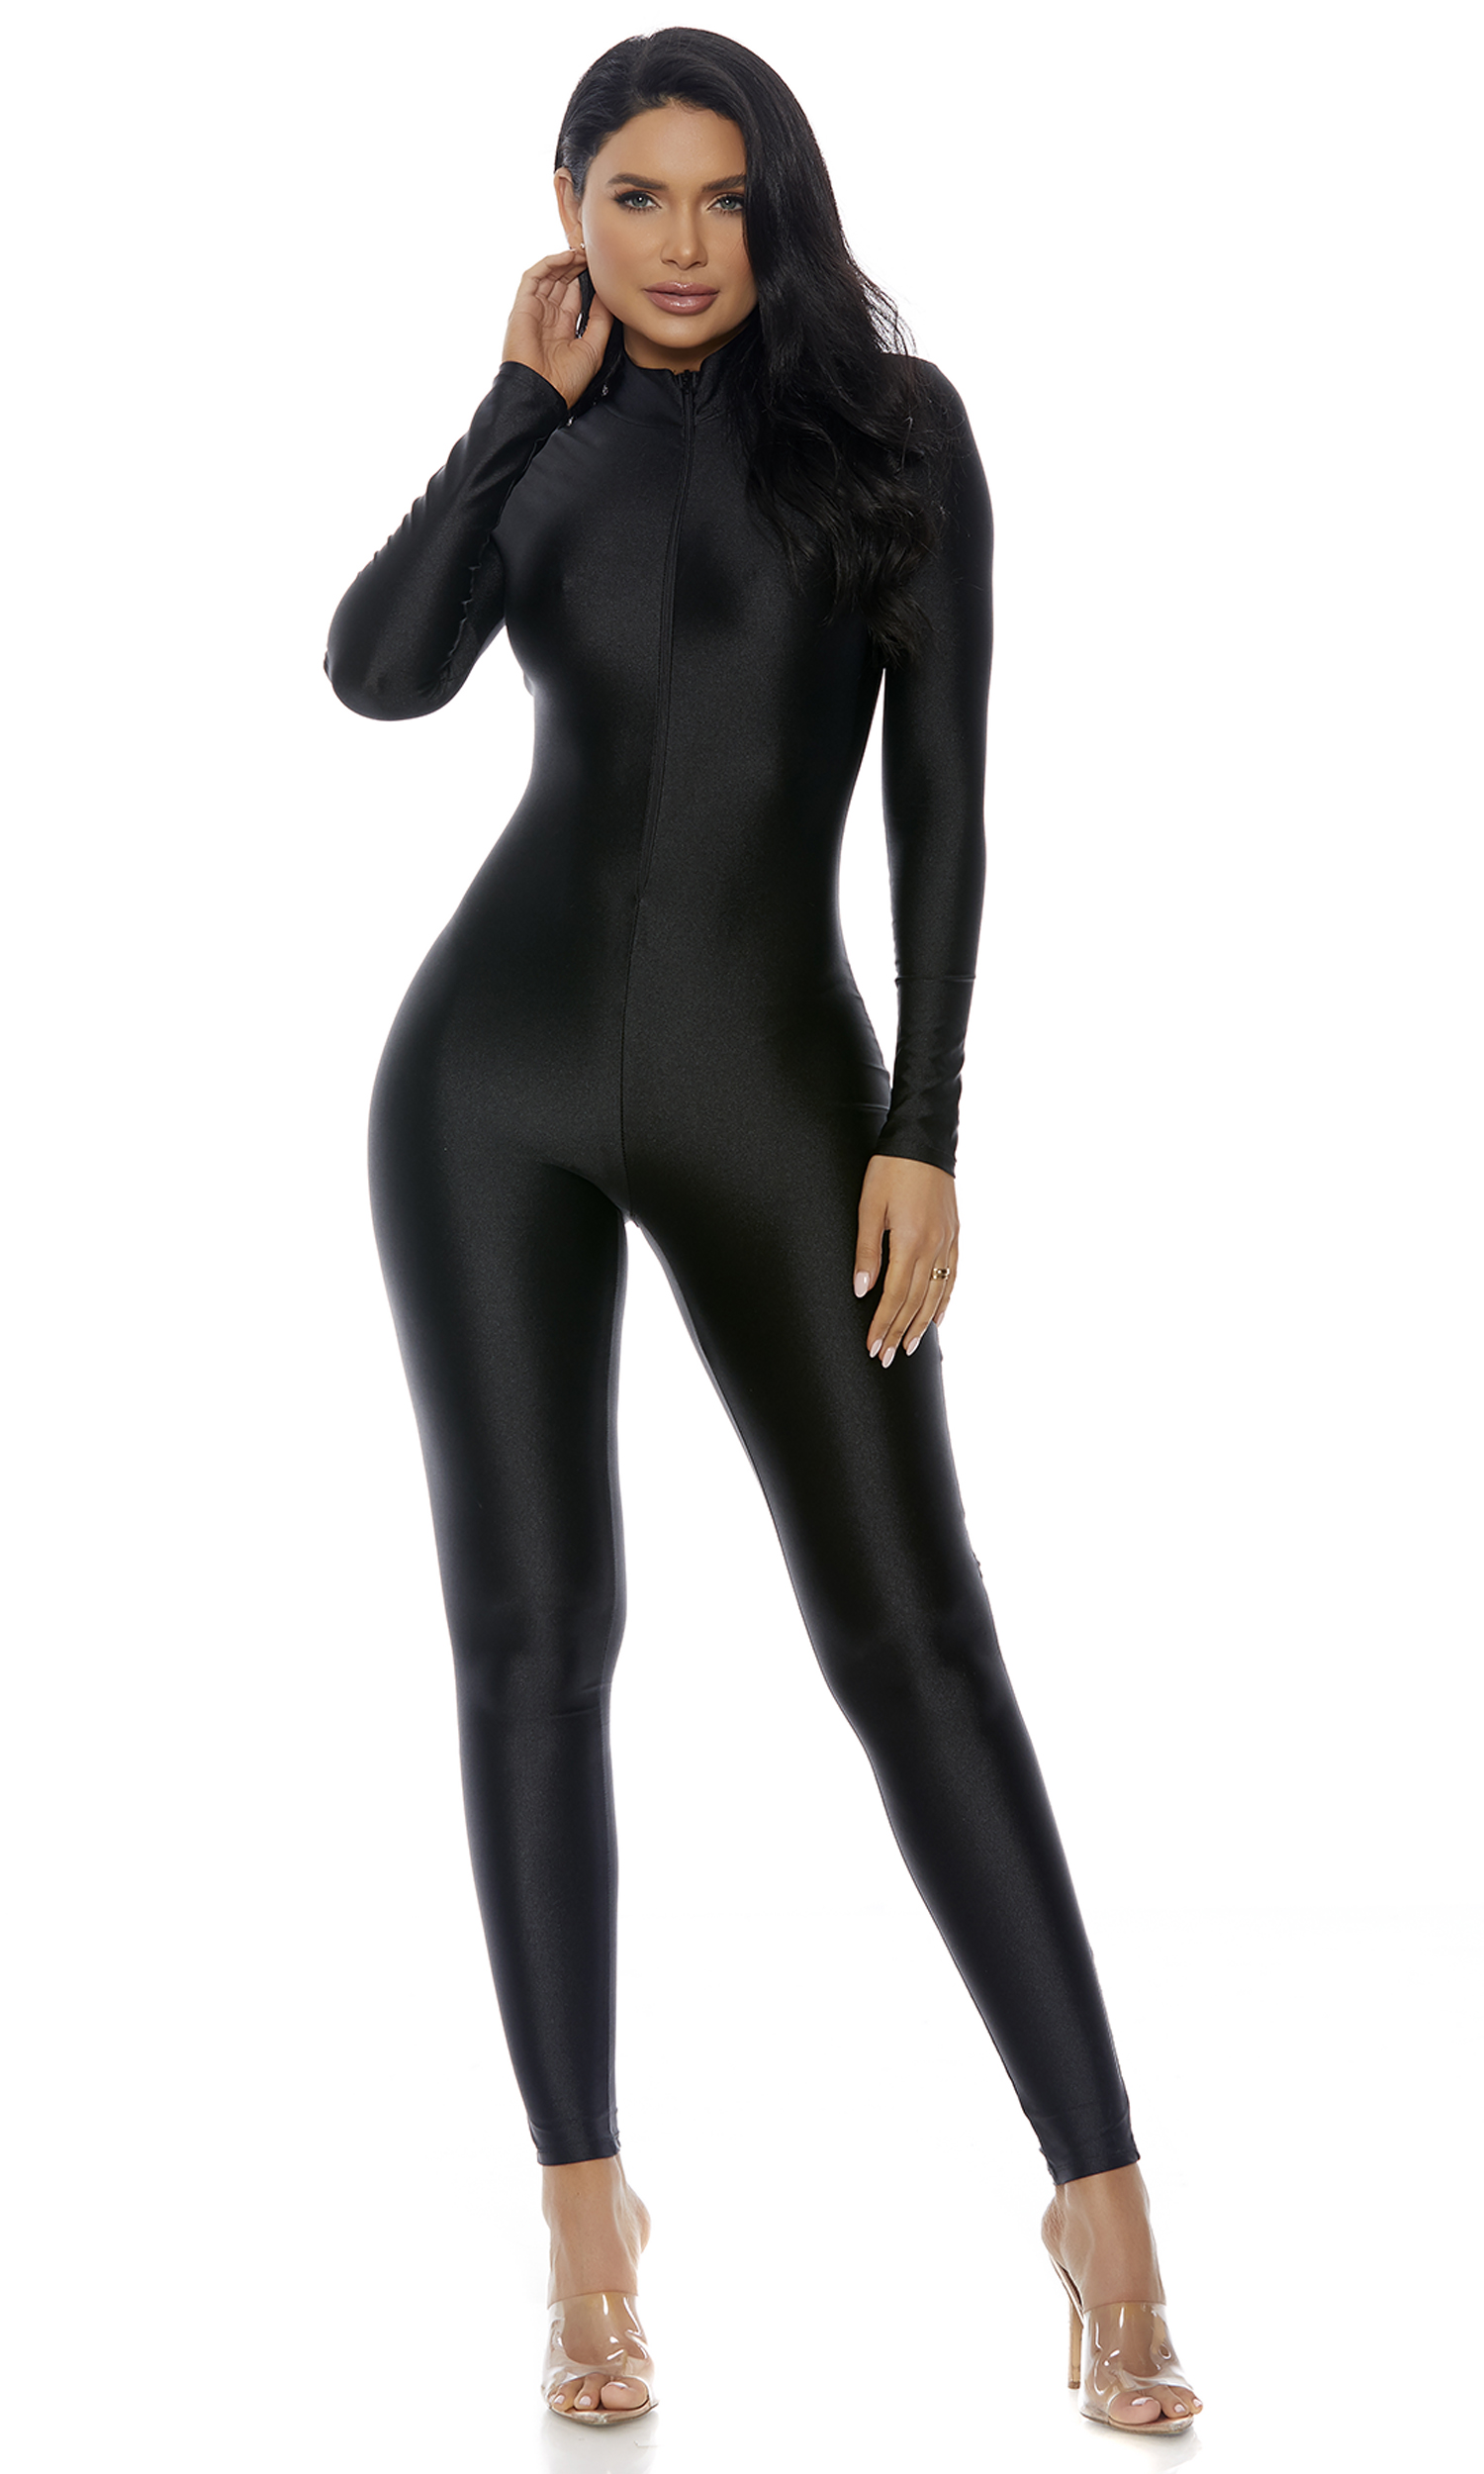 https://www.thecostumeland.com/images/zoom/fr119404bk-mock-neck-woman-bodysuit-creative.jpg